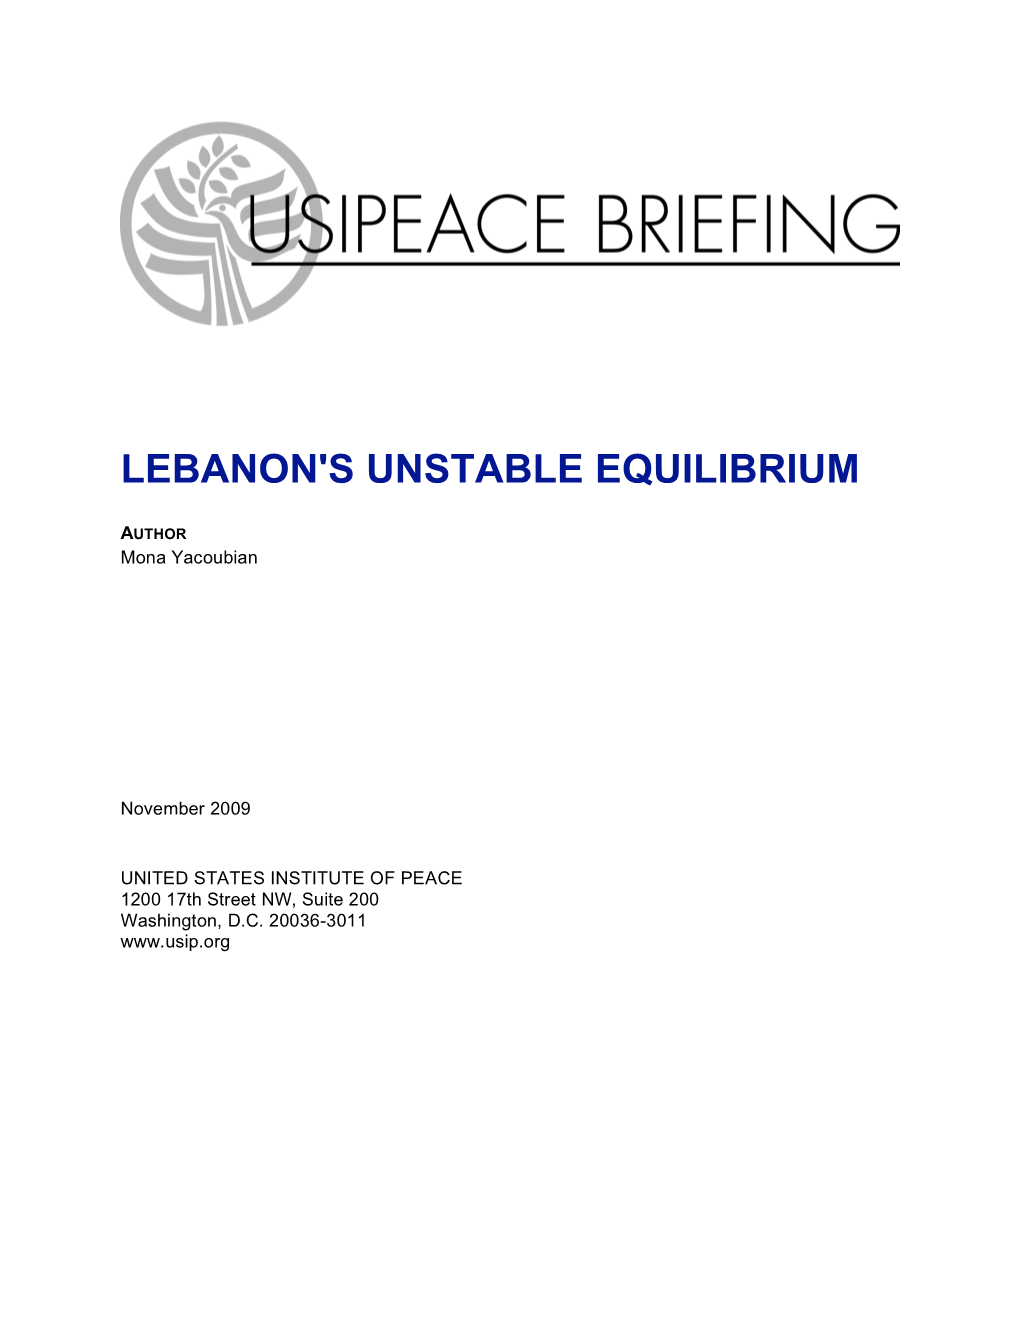 Lebanon's Unstable Equilibrium